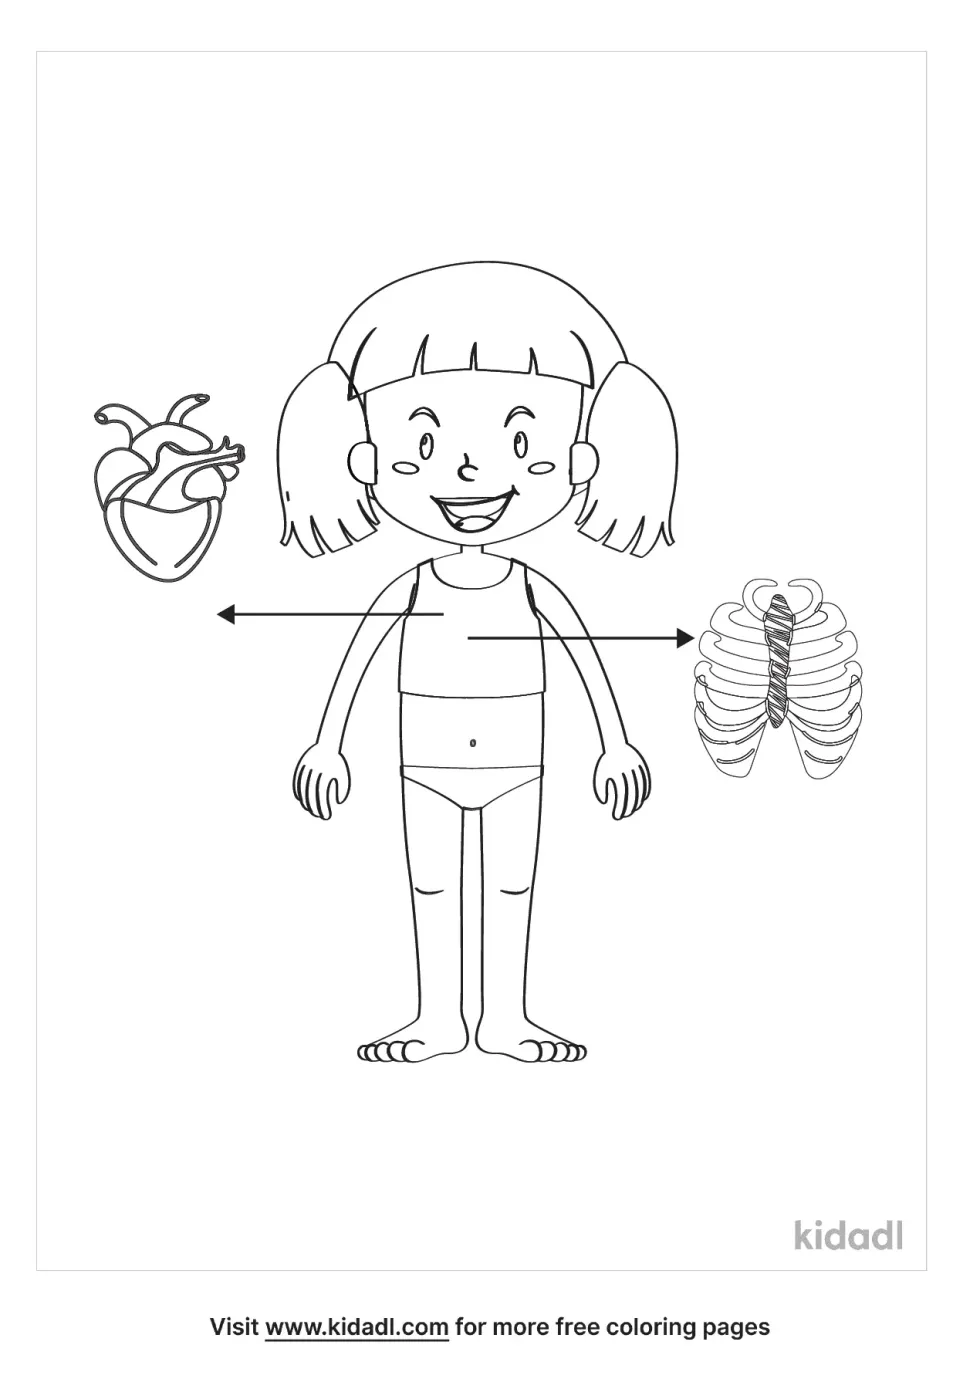 Human Anatomy For Kids